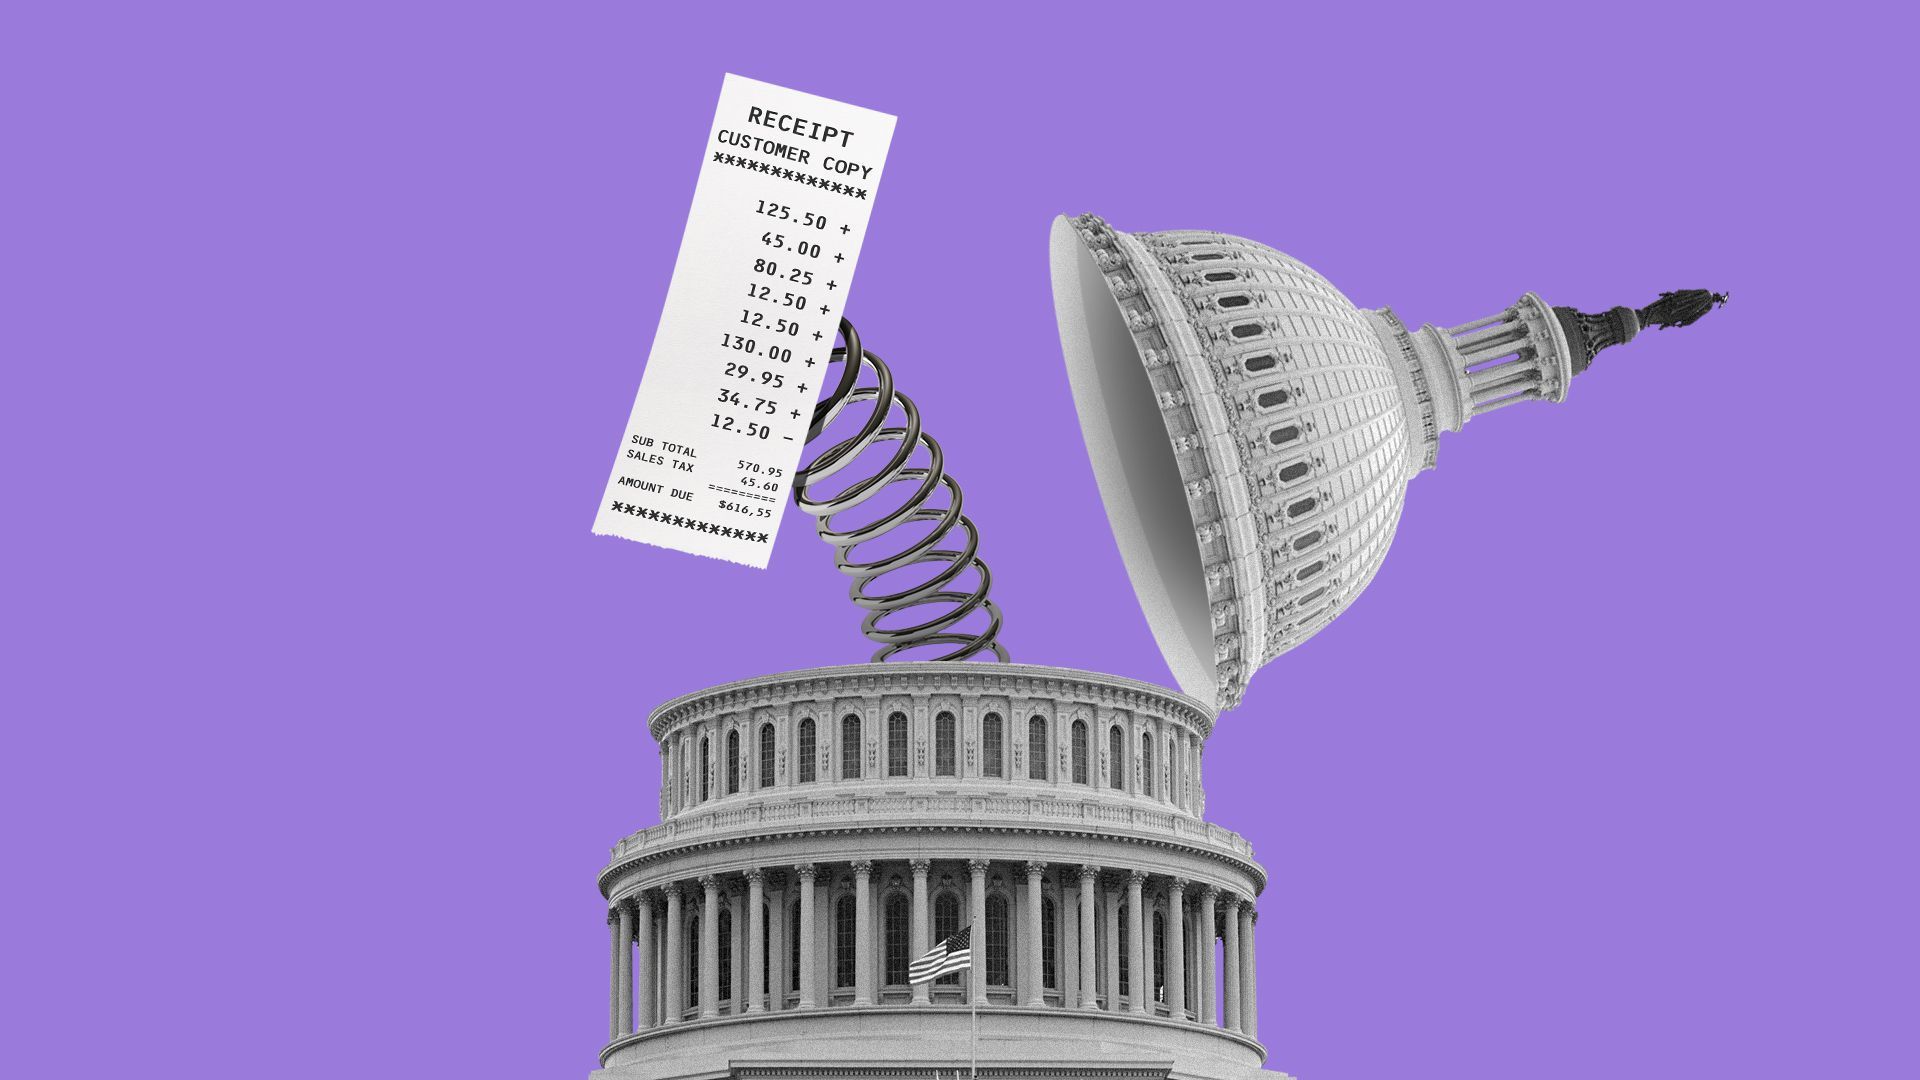 Congress dealing with surprise medical bills